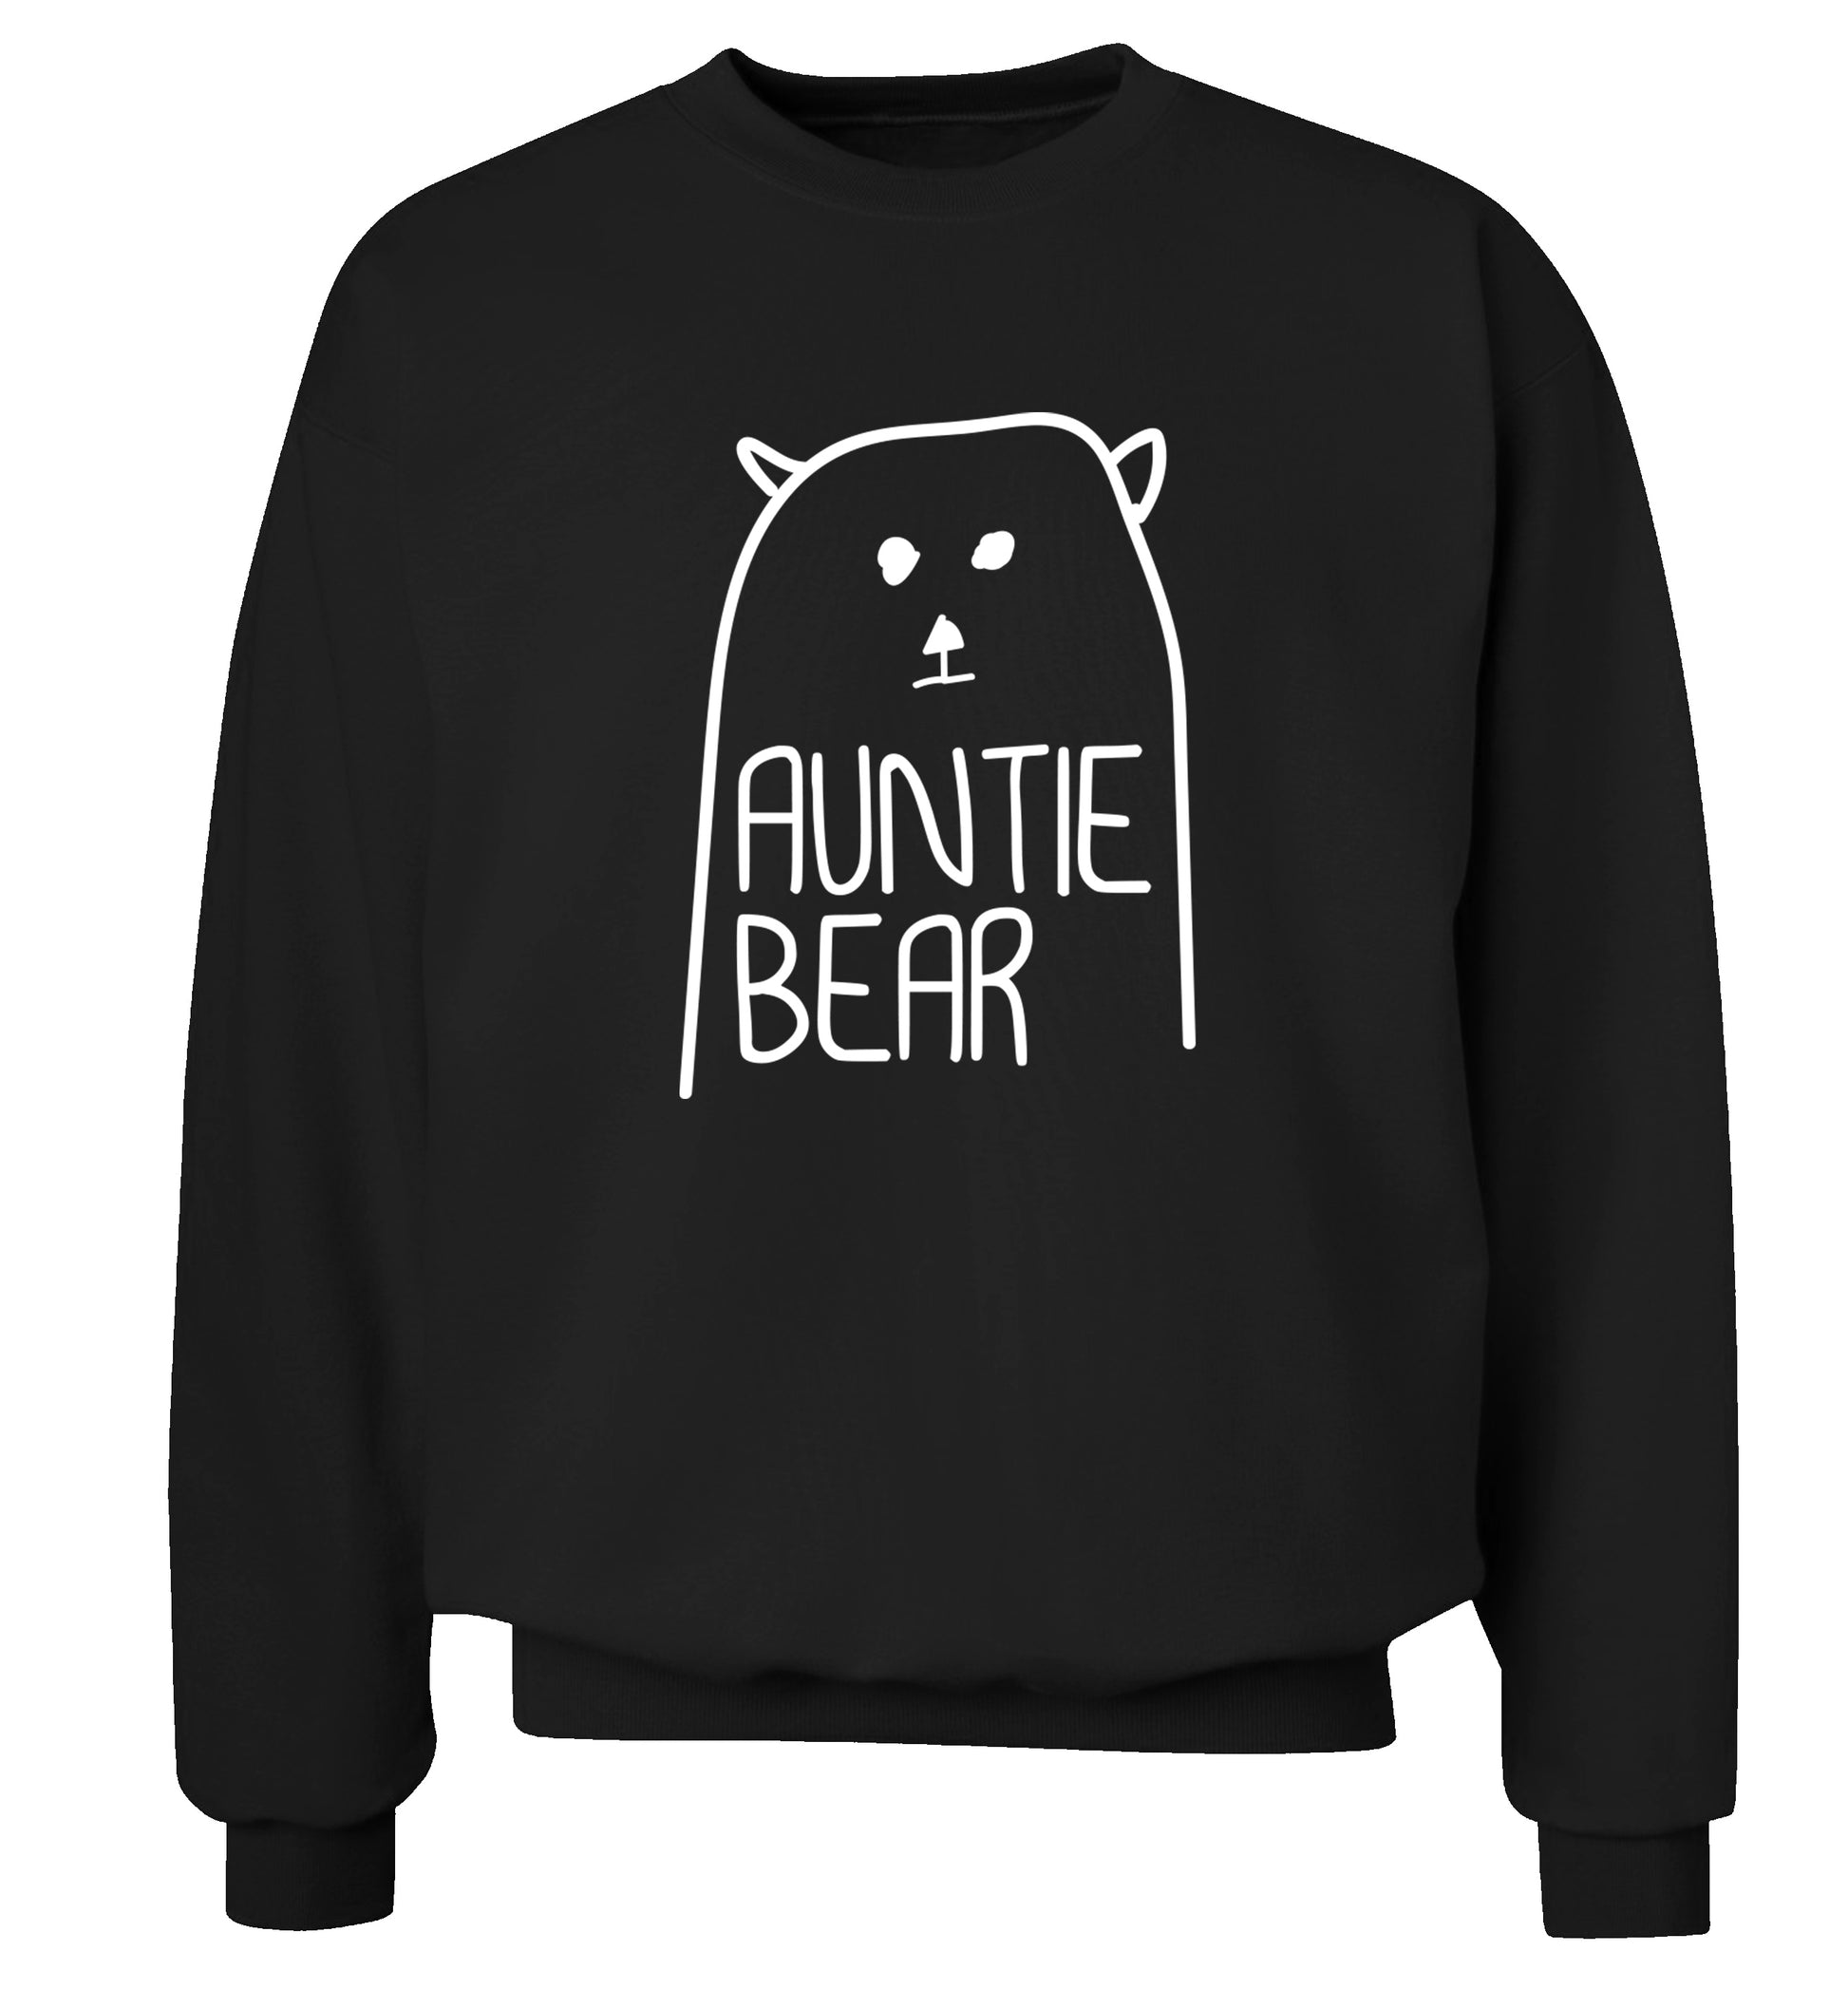 Auntie bear Adult's unisex black Sweater 2XL